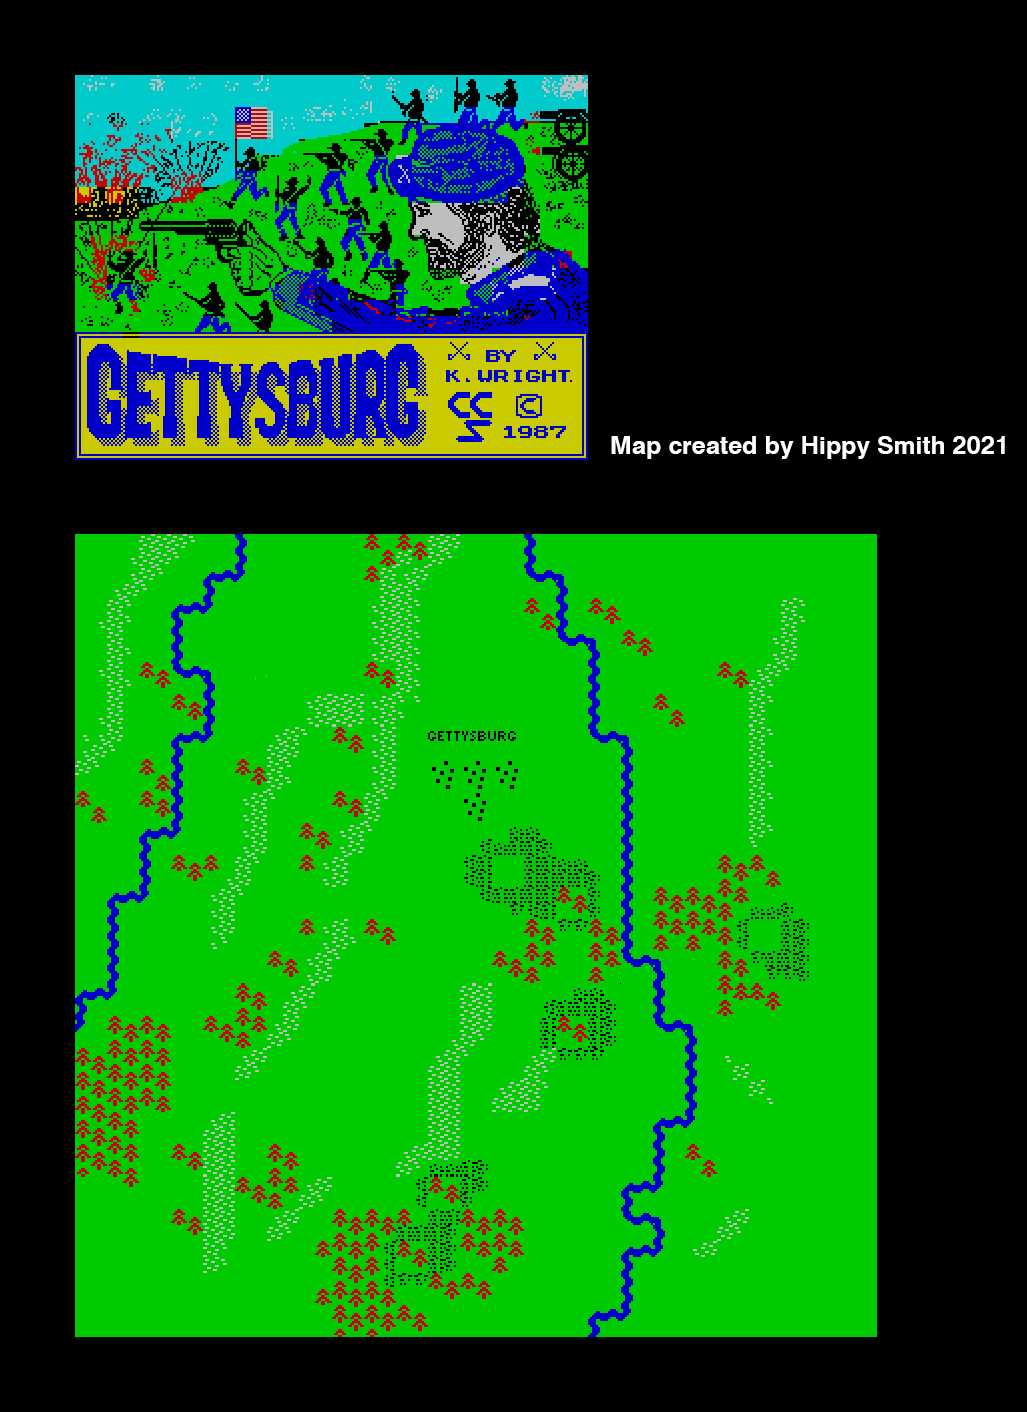 Gettysburg - The Map